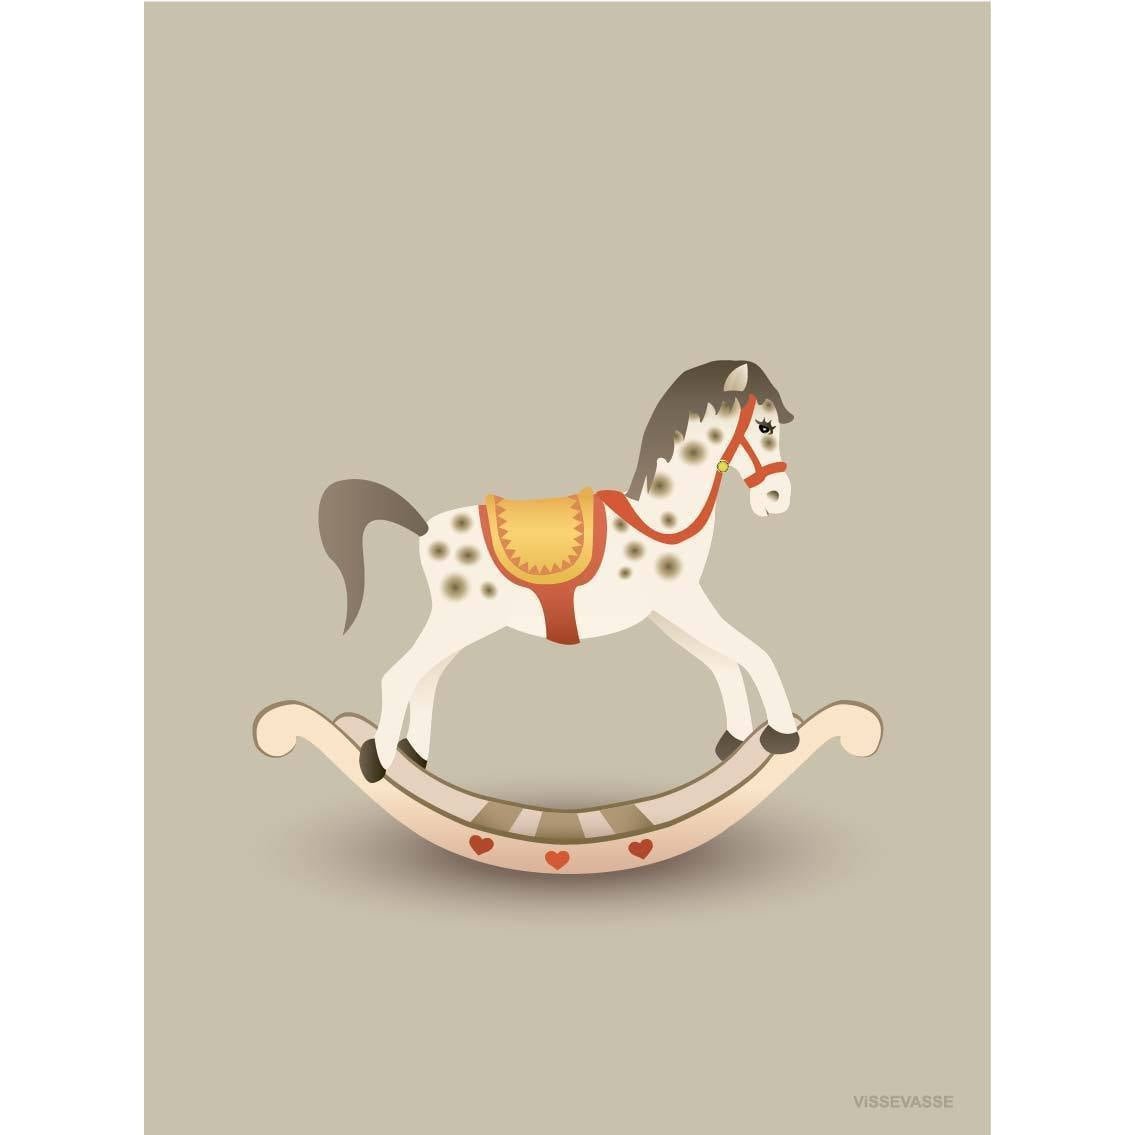 Vissevase Rocking Horse Poster 15 x21 cm, marrón arenoso